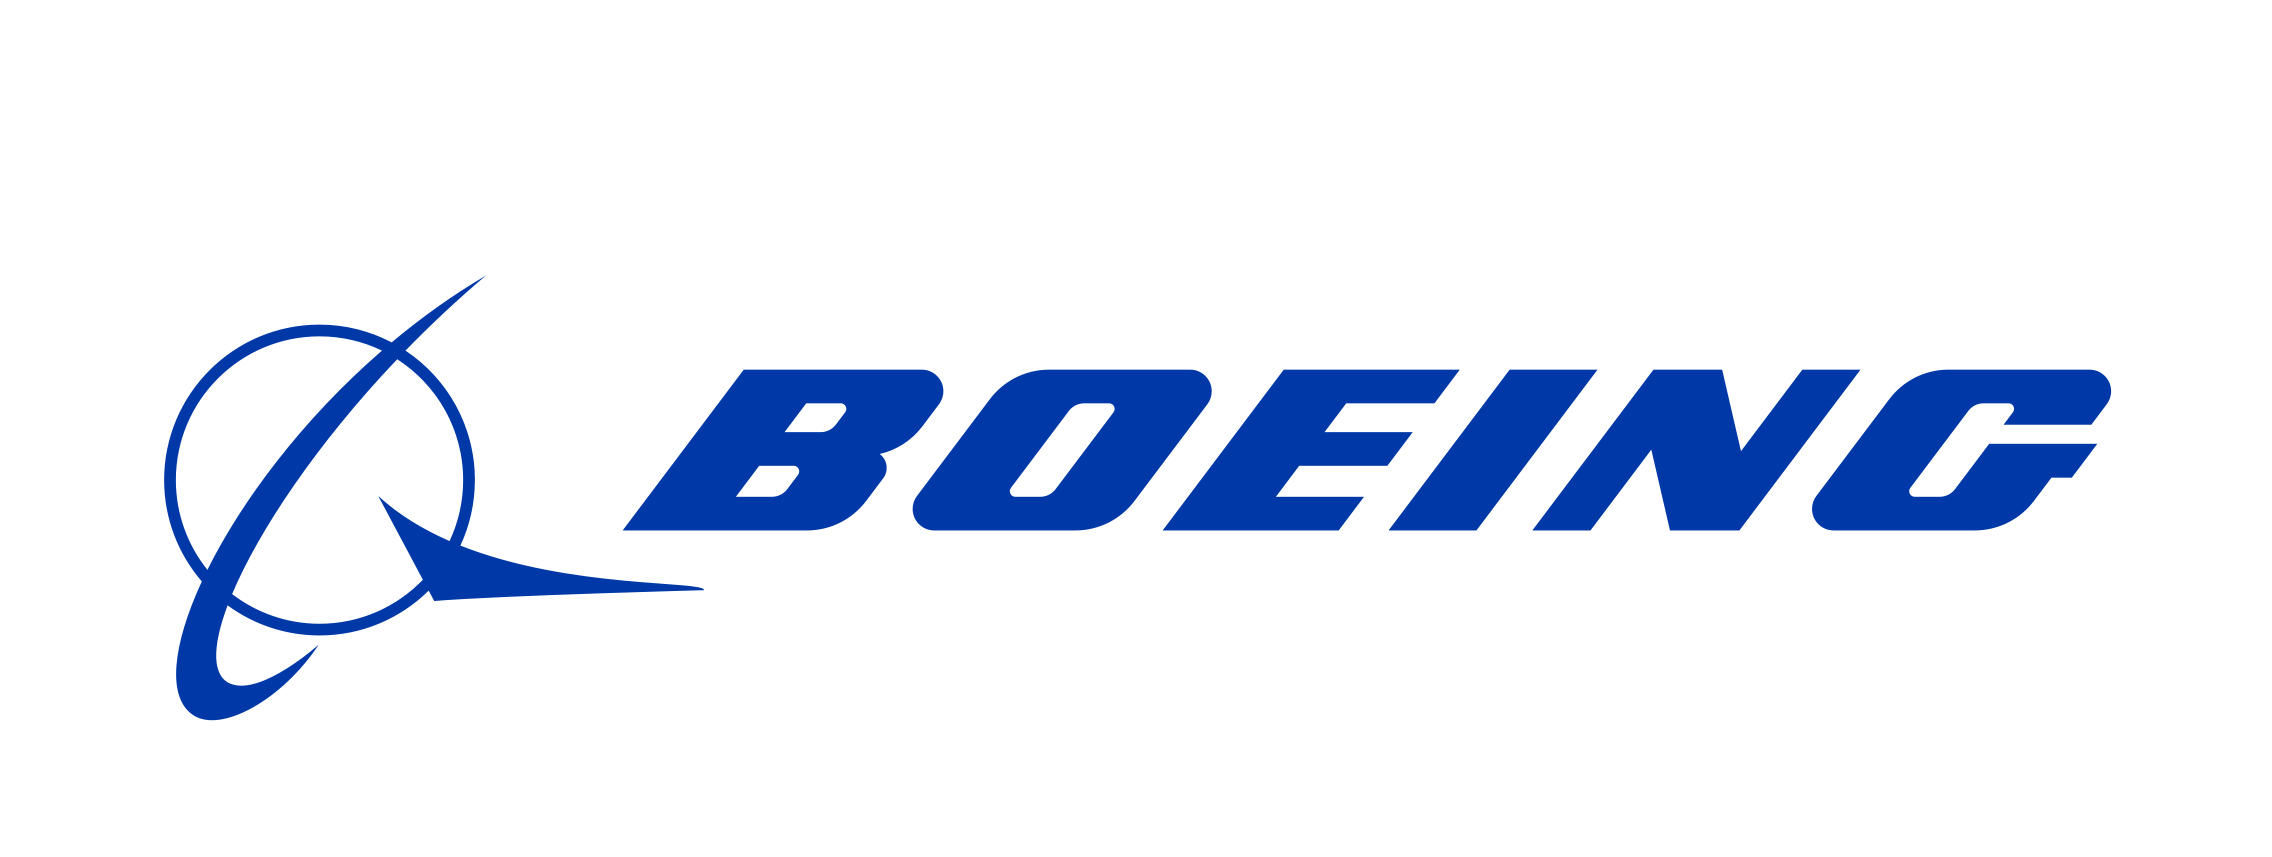 Image result for boeing logo